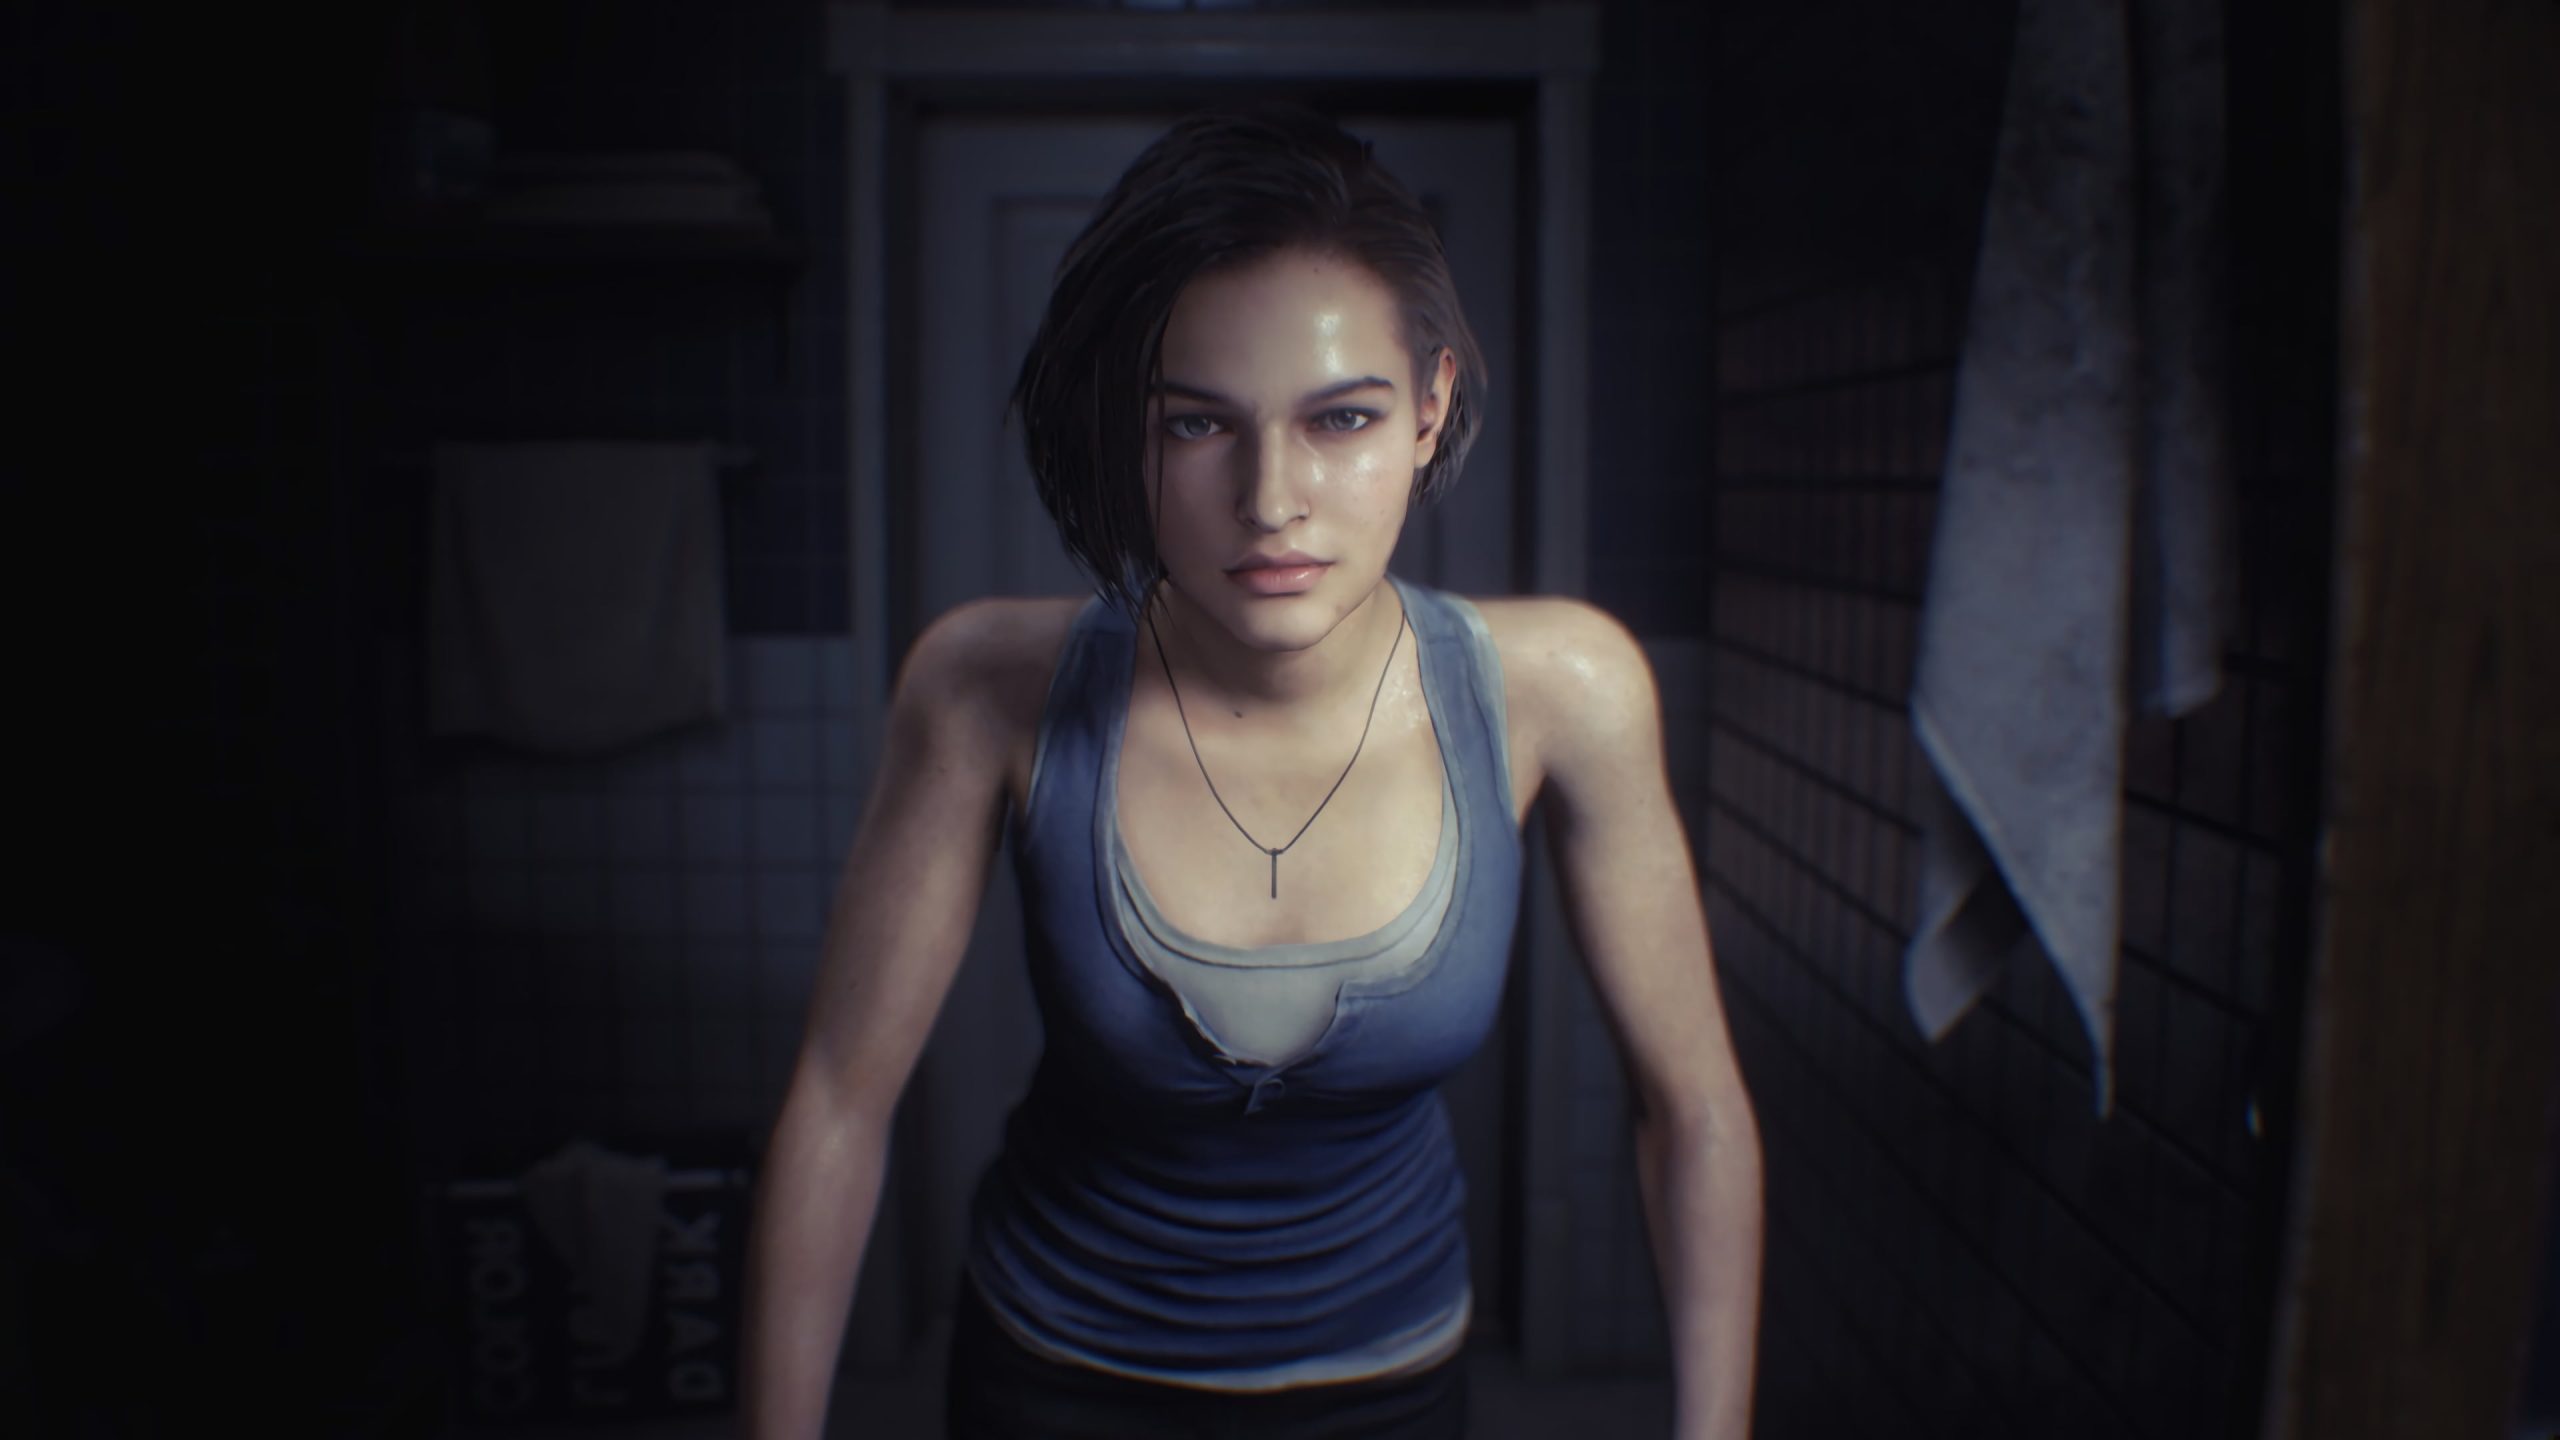 Jill Valentine, Resident Evil wallpaper, Resident Evil HD Remaster, Resident Evil 3 Remake